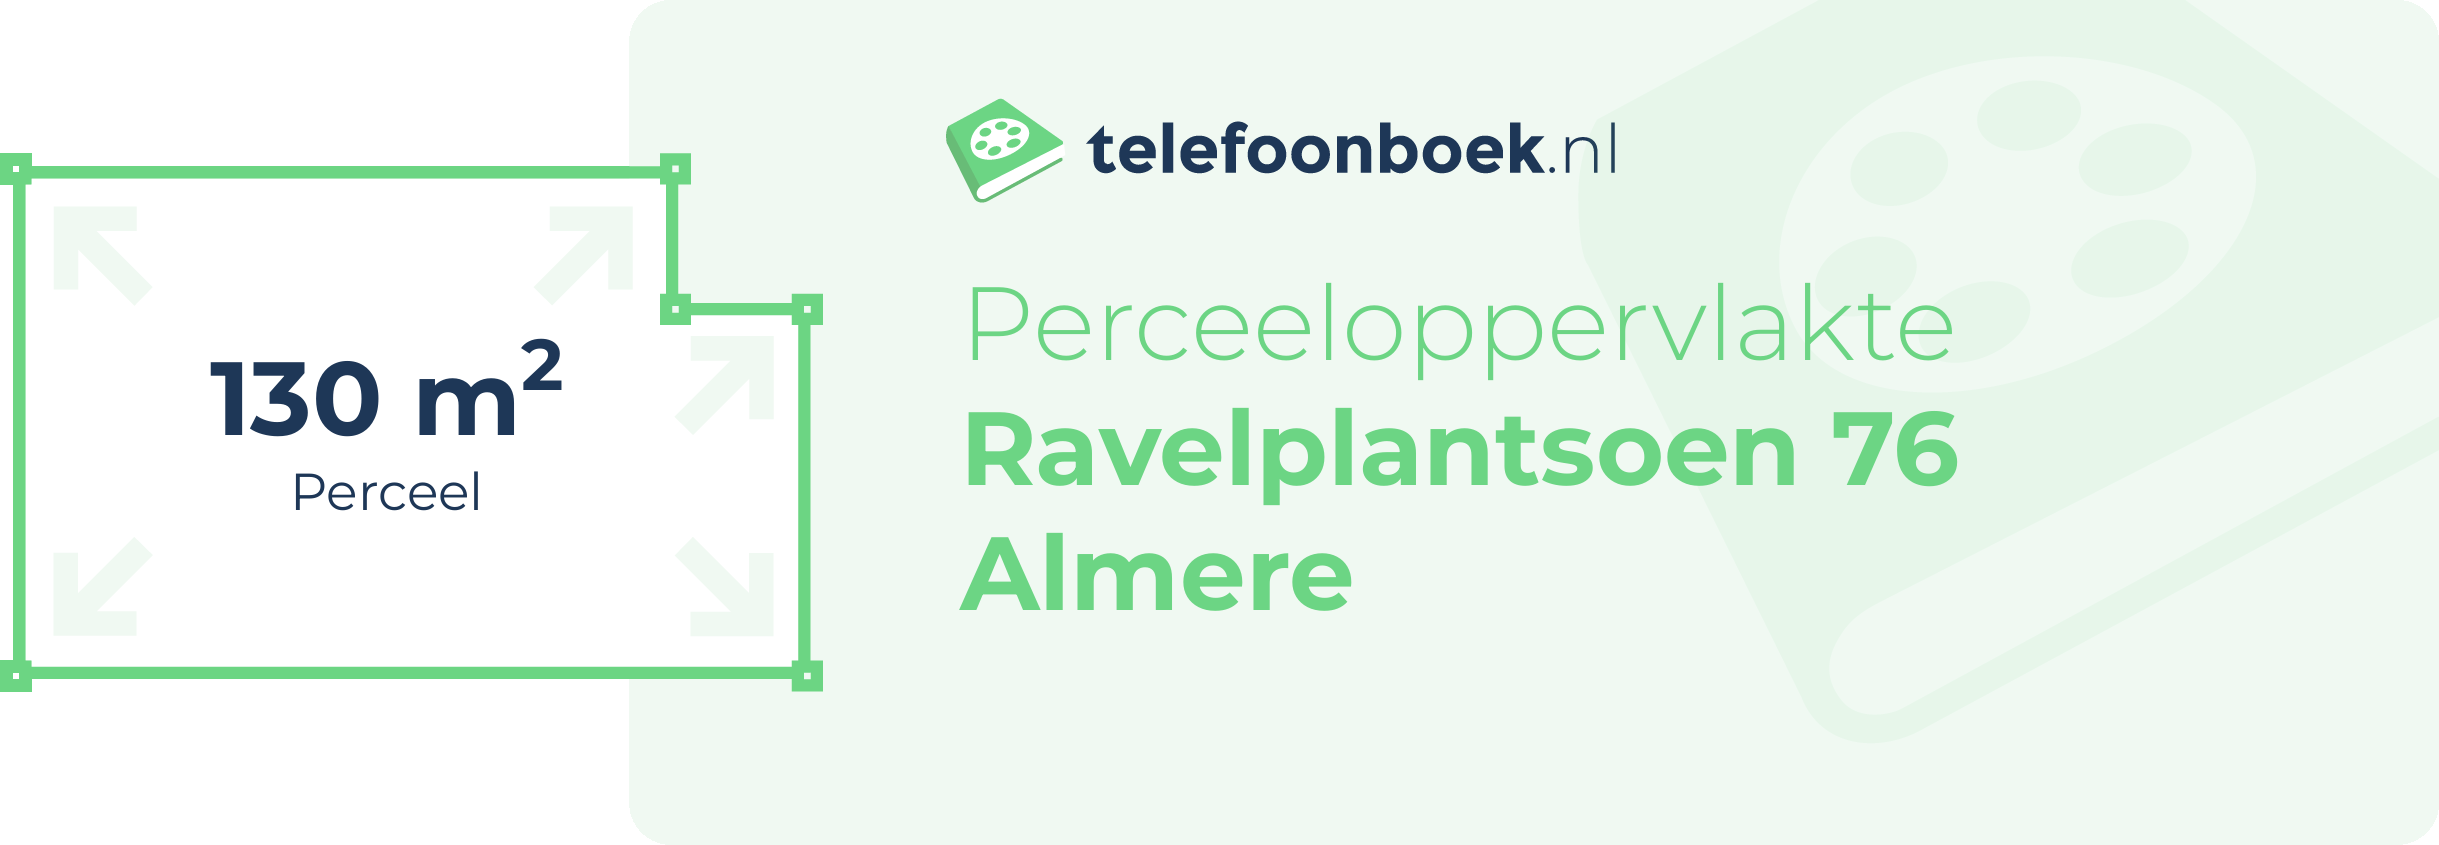 Perceeloppervlakte Ravelplantsoen 76 Almere